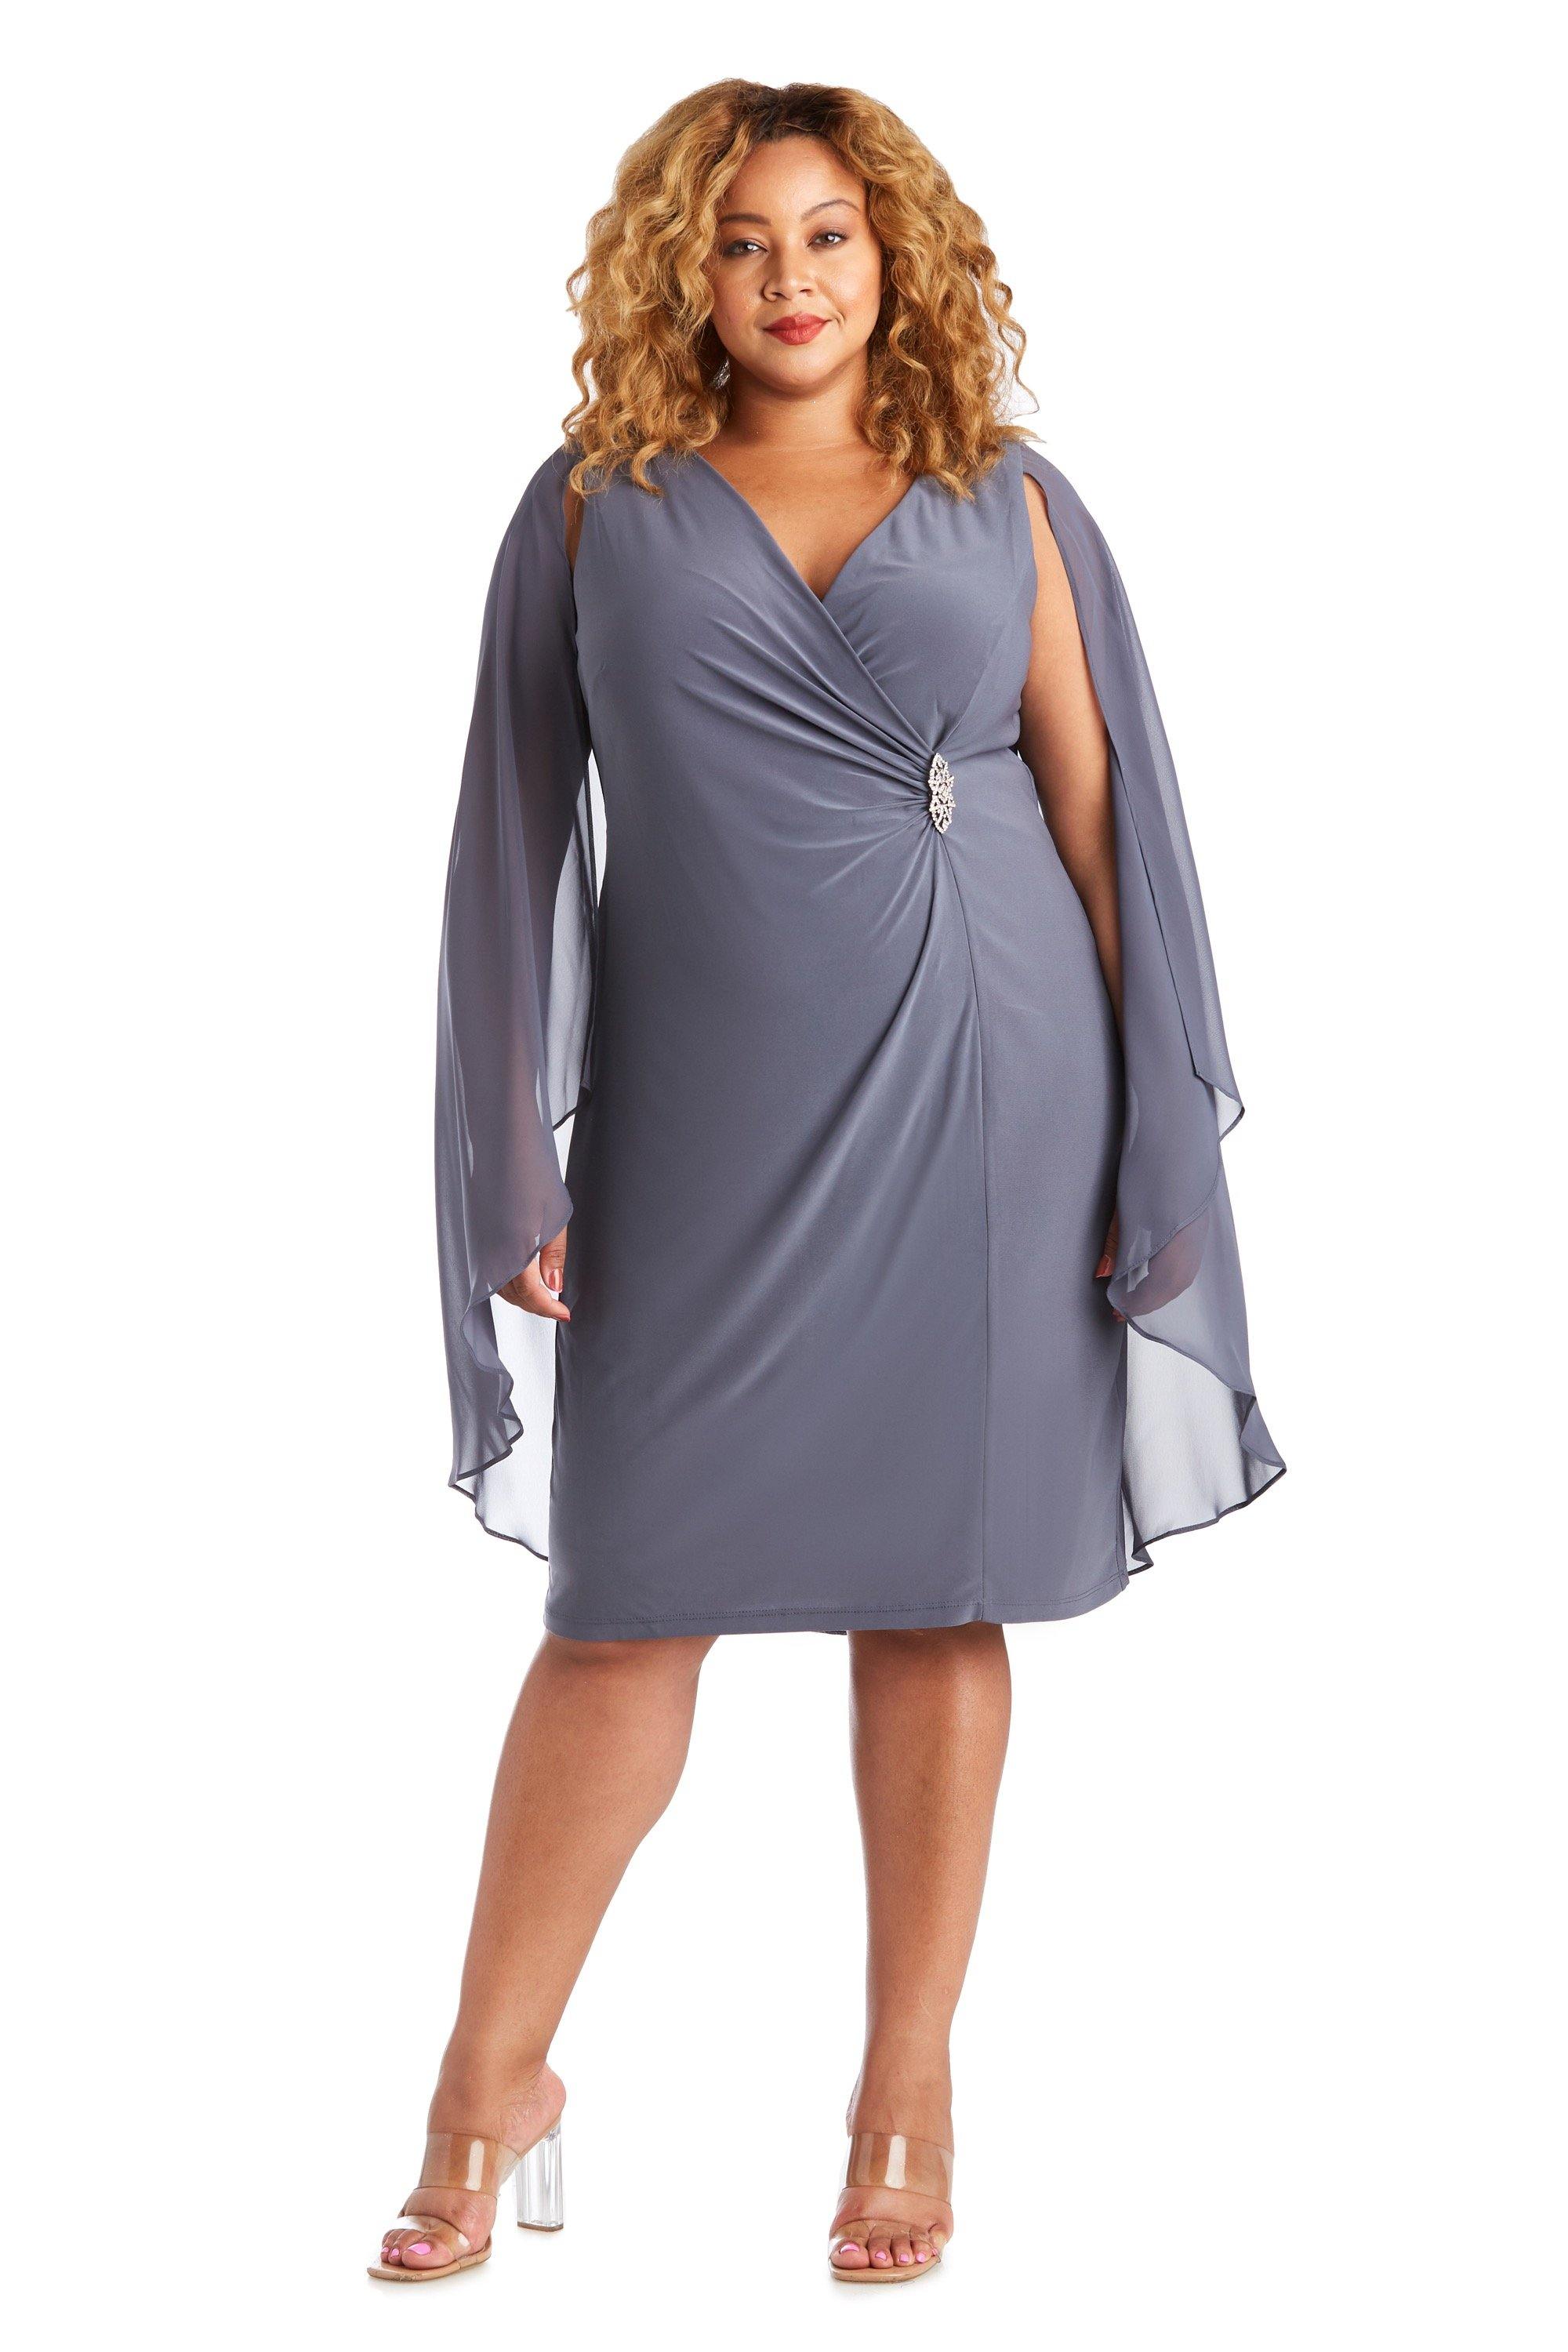 R&M 5806W Short Size Dress | The Dress